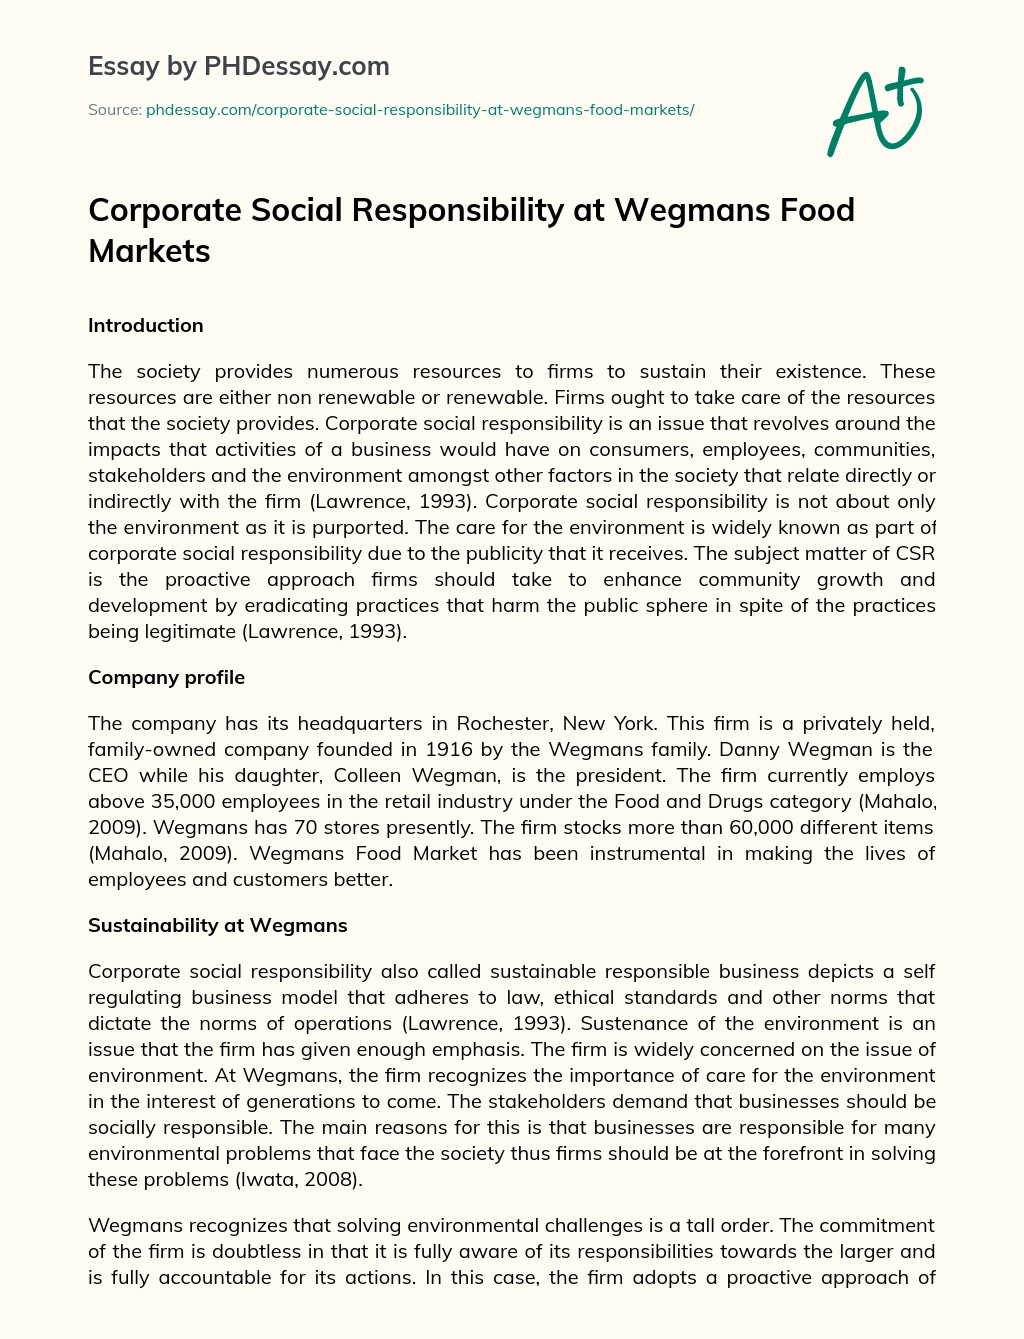 Corporate Social Responsibility at Wegmans Food Markets essay